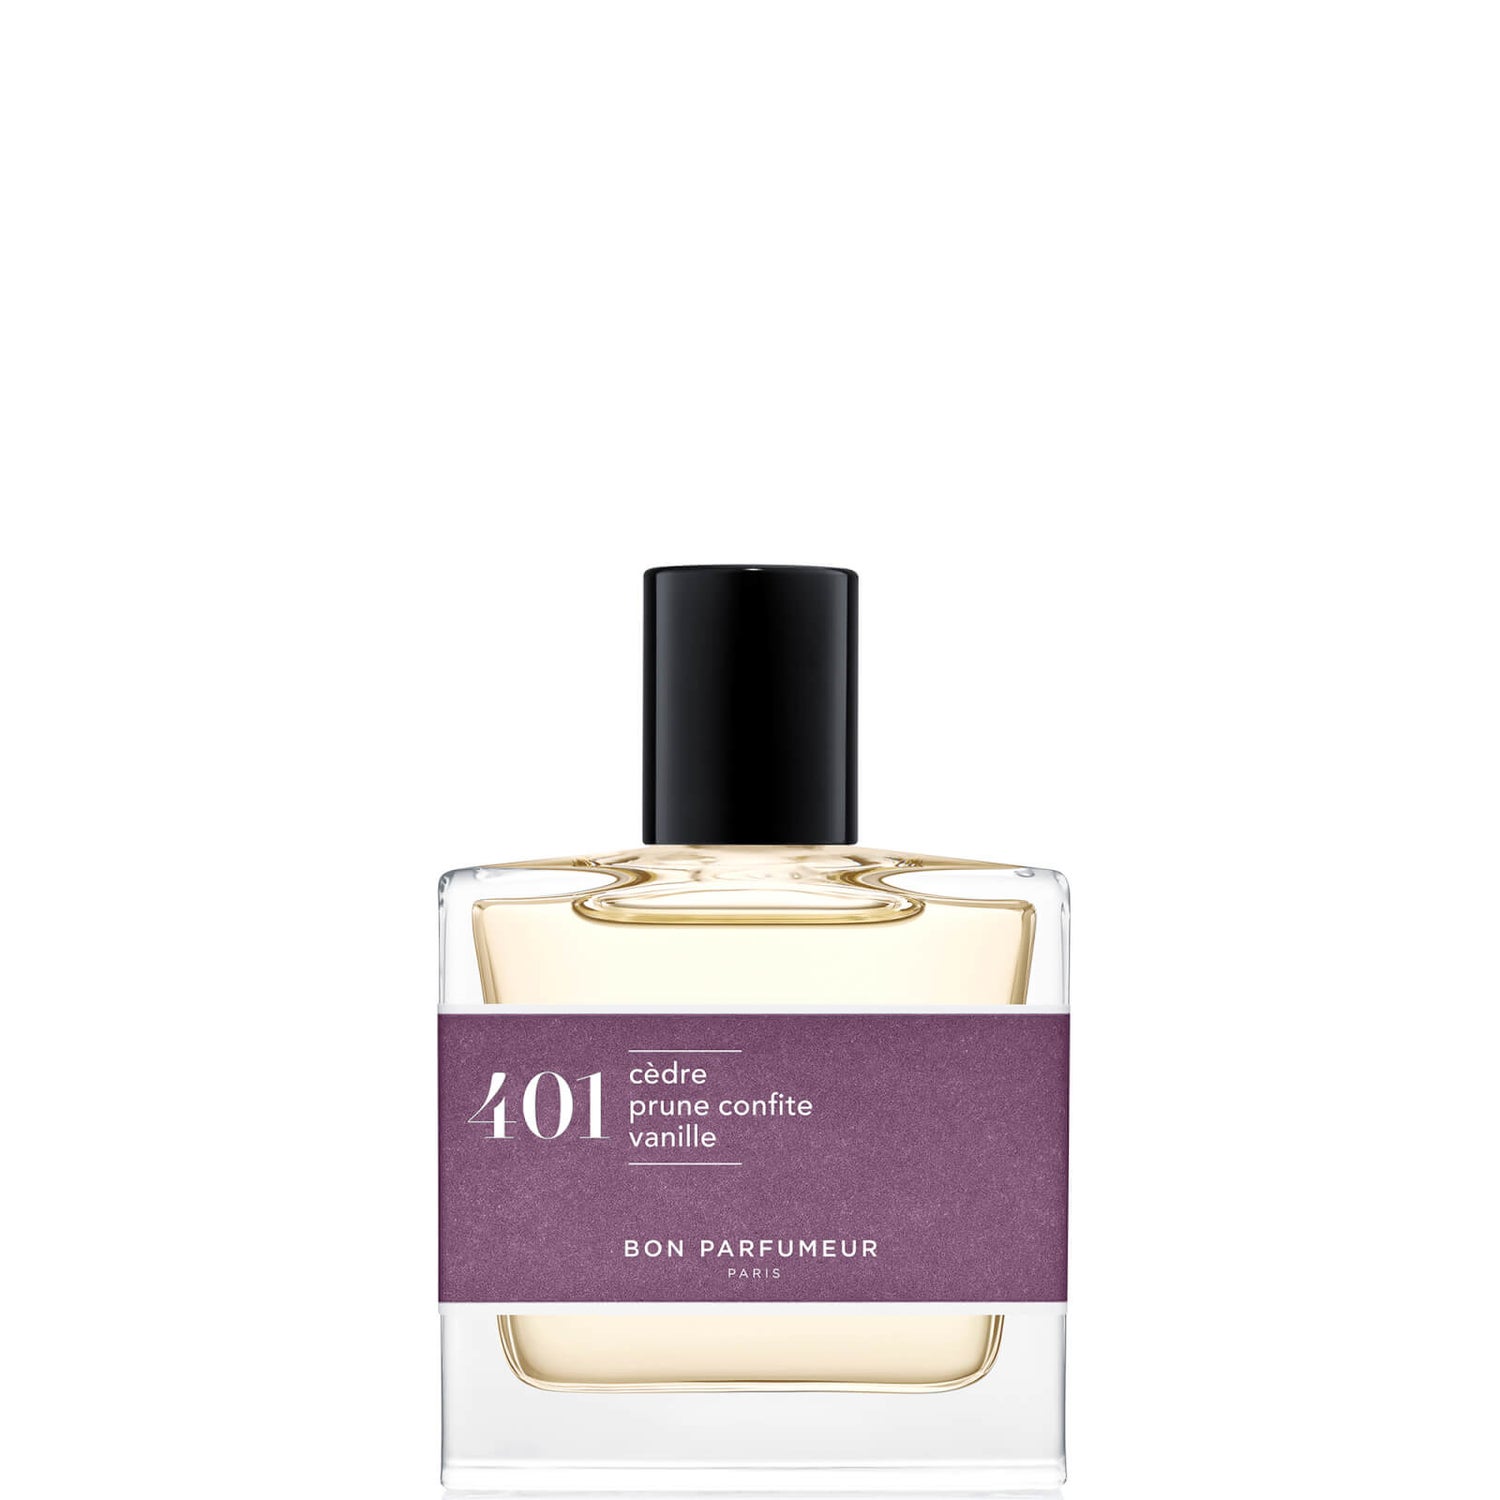 Bon Parfumeur 401 Cedar Candied Plum Vanilla Apă de parfum - 30ml